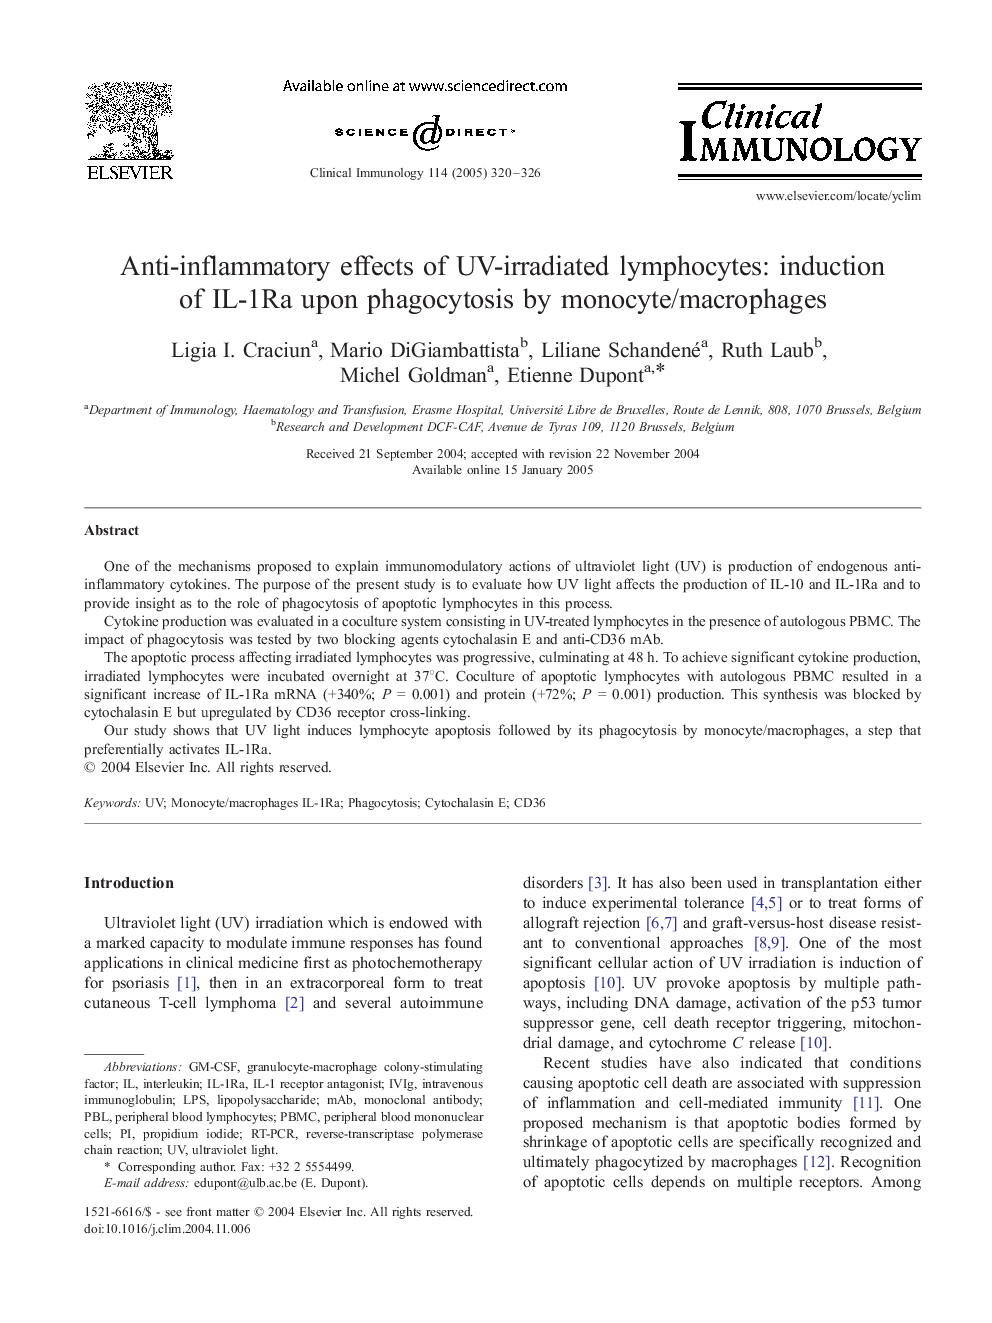 Anti-inflammatory effects of UV-irradiated lymphocytes: induction of IL-1Ra upon phagocytosis by monocyte/macrophages